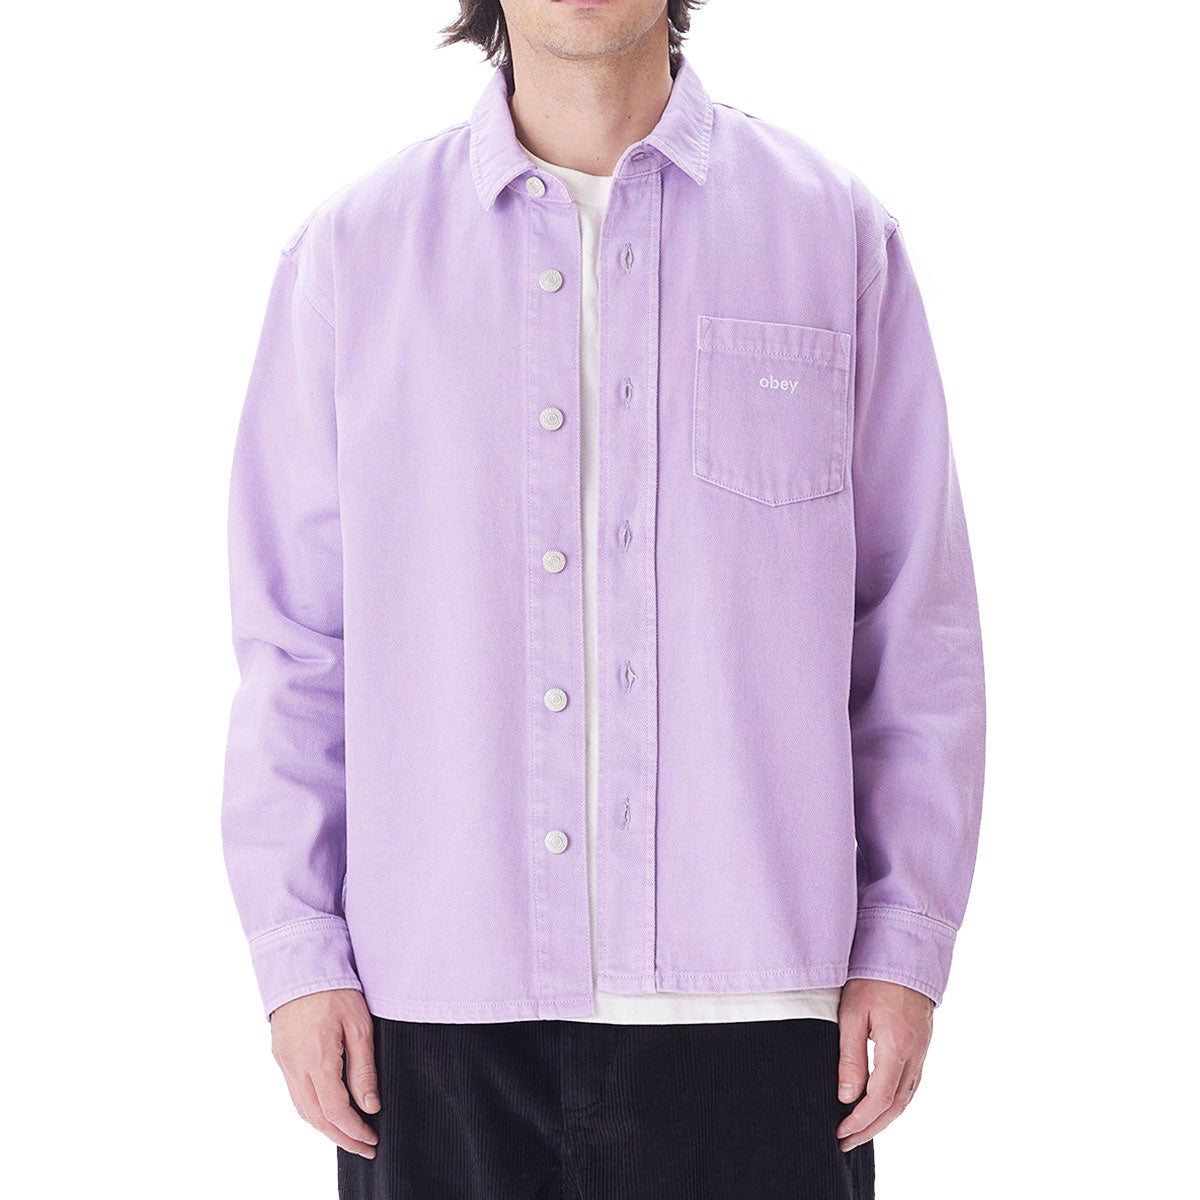 Obey Magnolia Long Sleeve Shirt - Purple Rose image 1